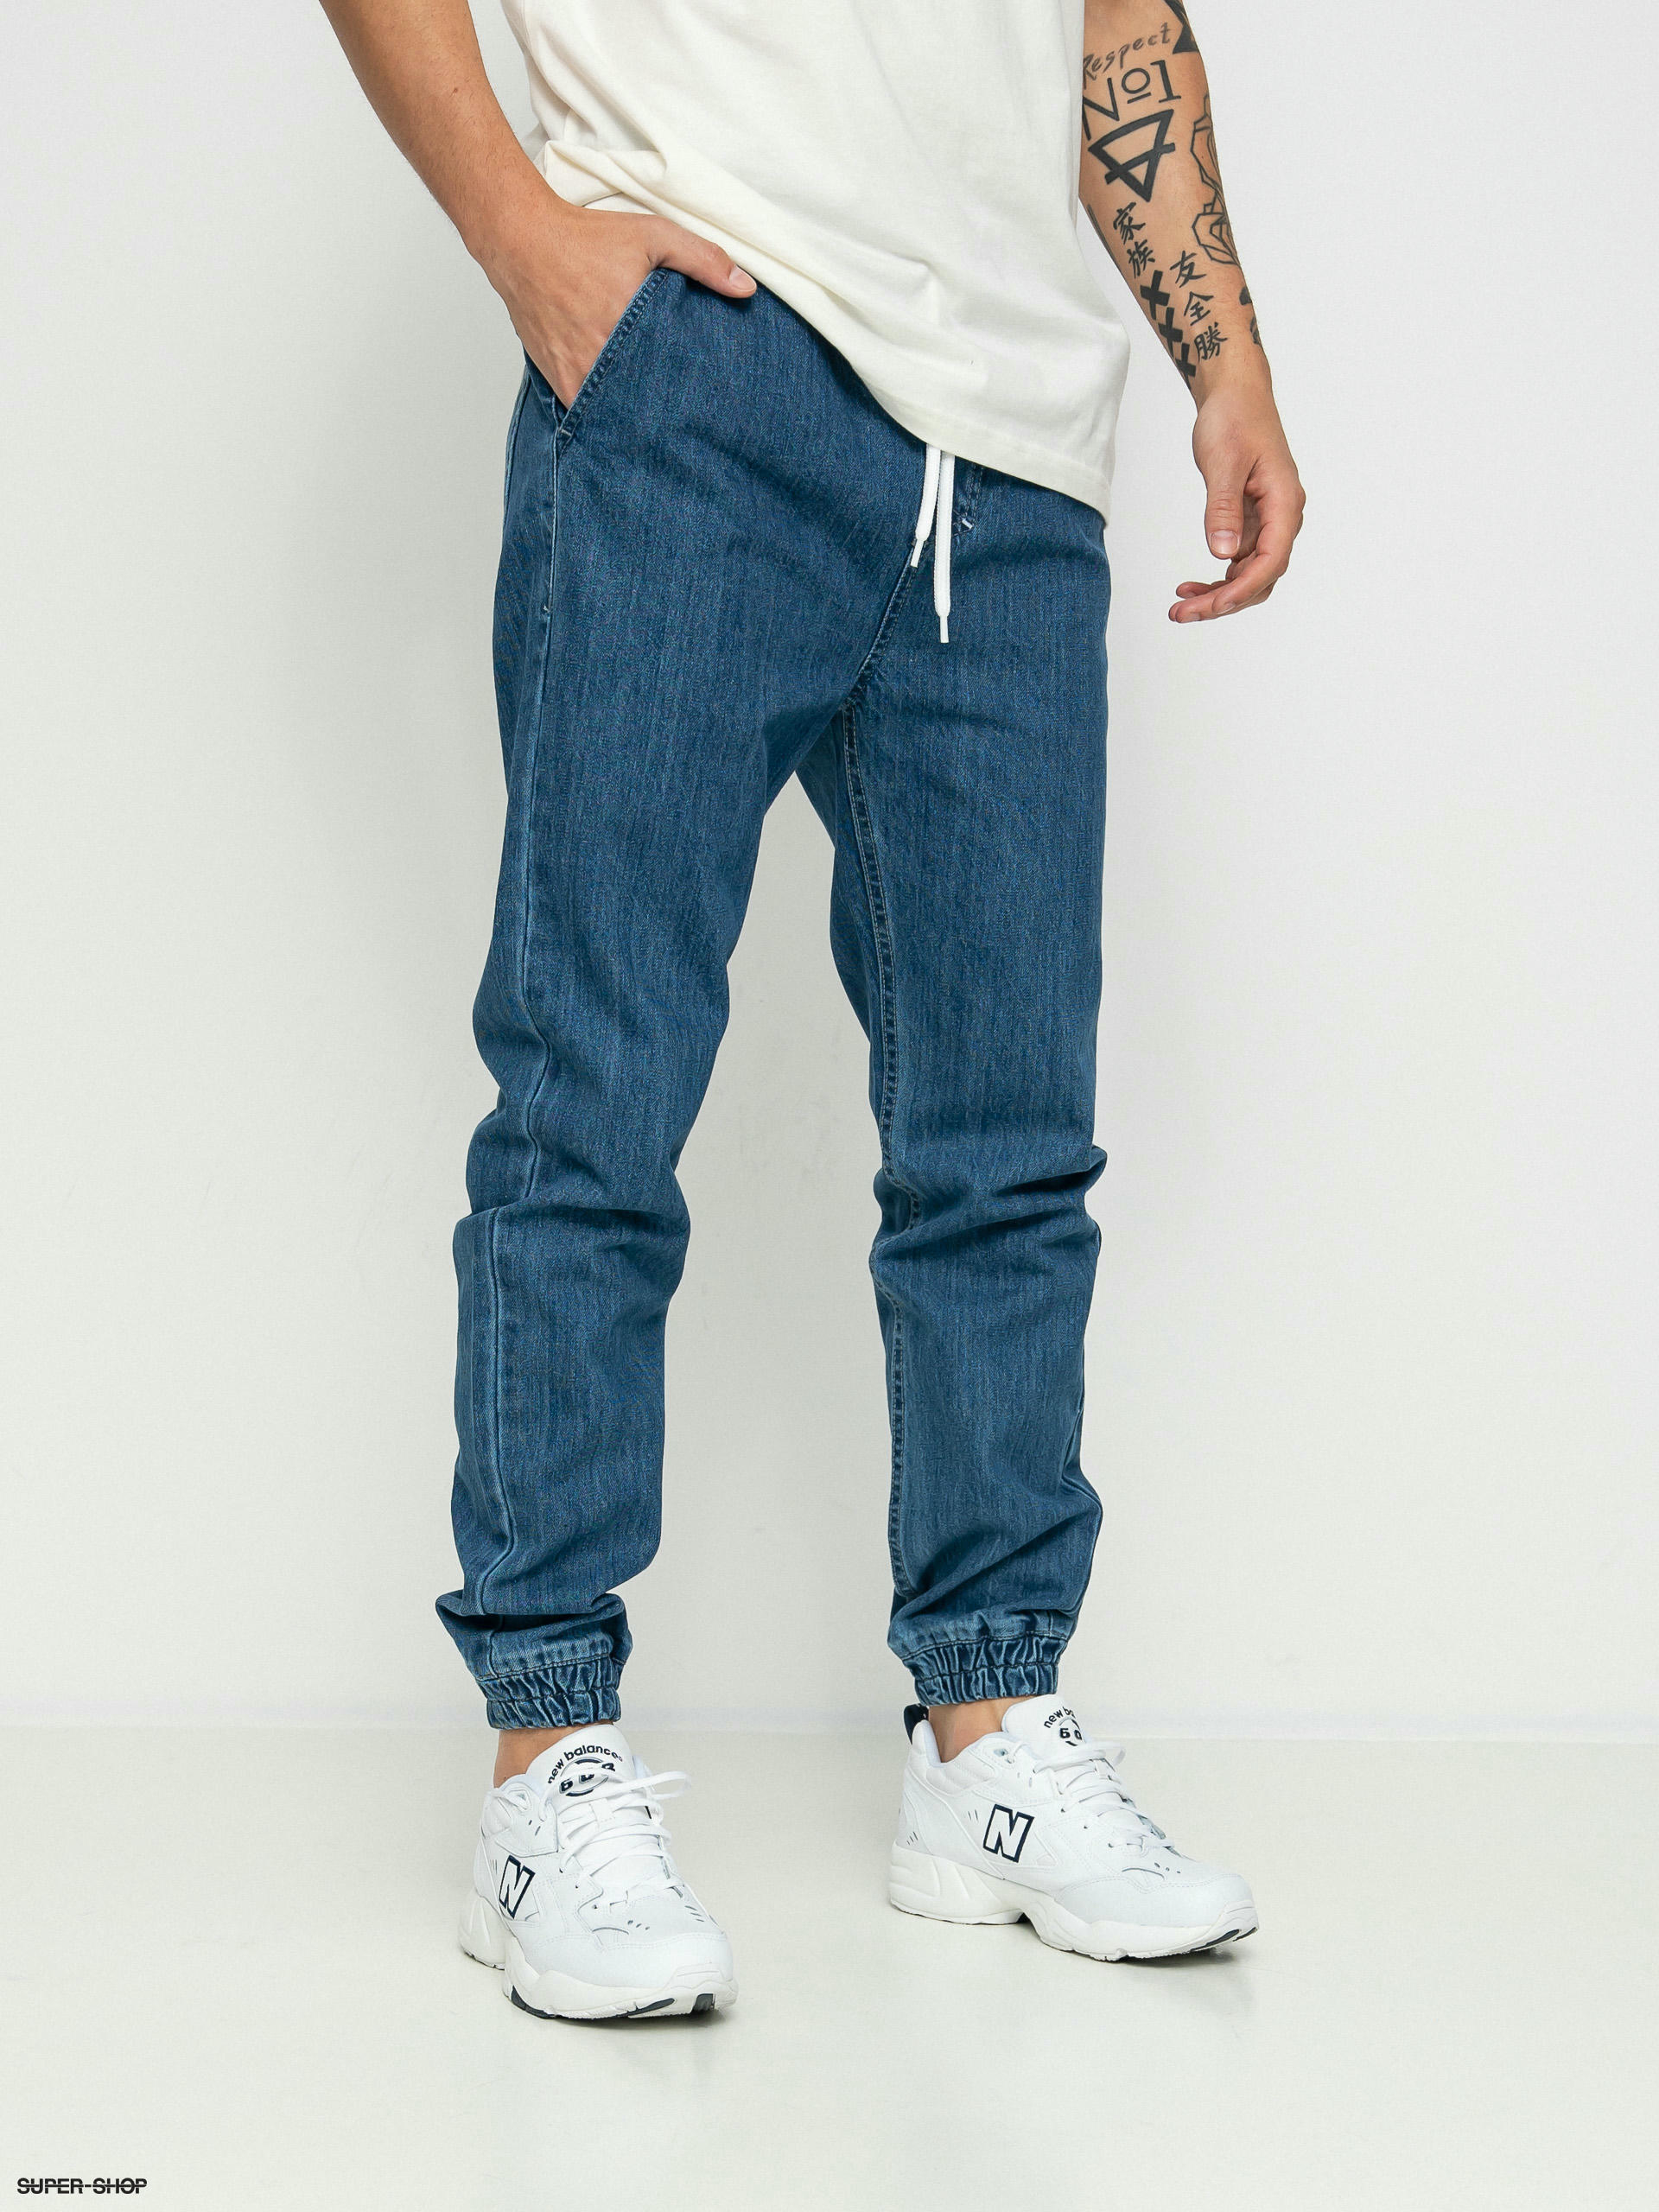 Mens Elastic Workout Pocket Trousers Casual Denim Jeans Jogger Pants  Sweatpants | eBay